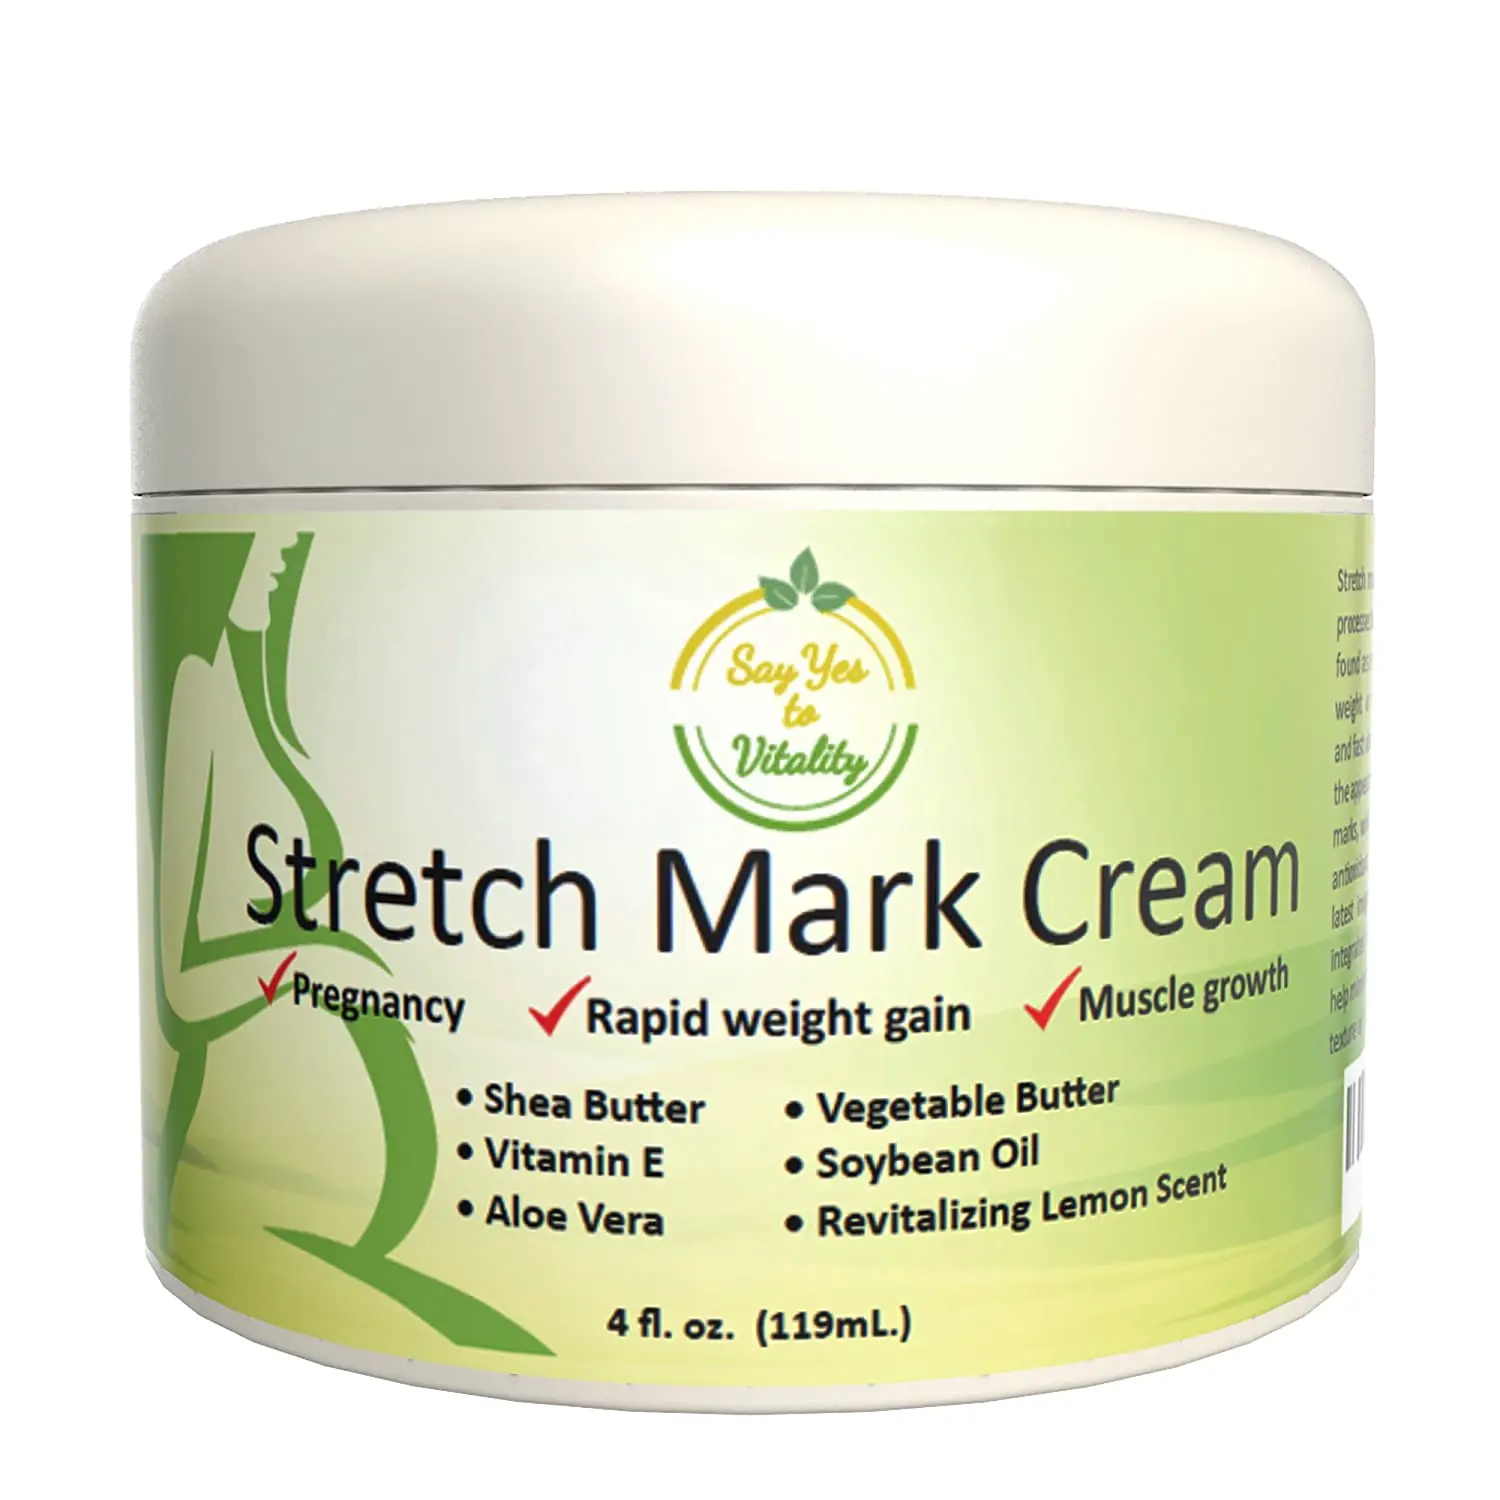 Top 10 Best Pregnancy Stretch Mark Creams For Women ...